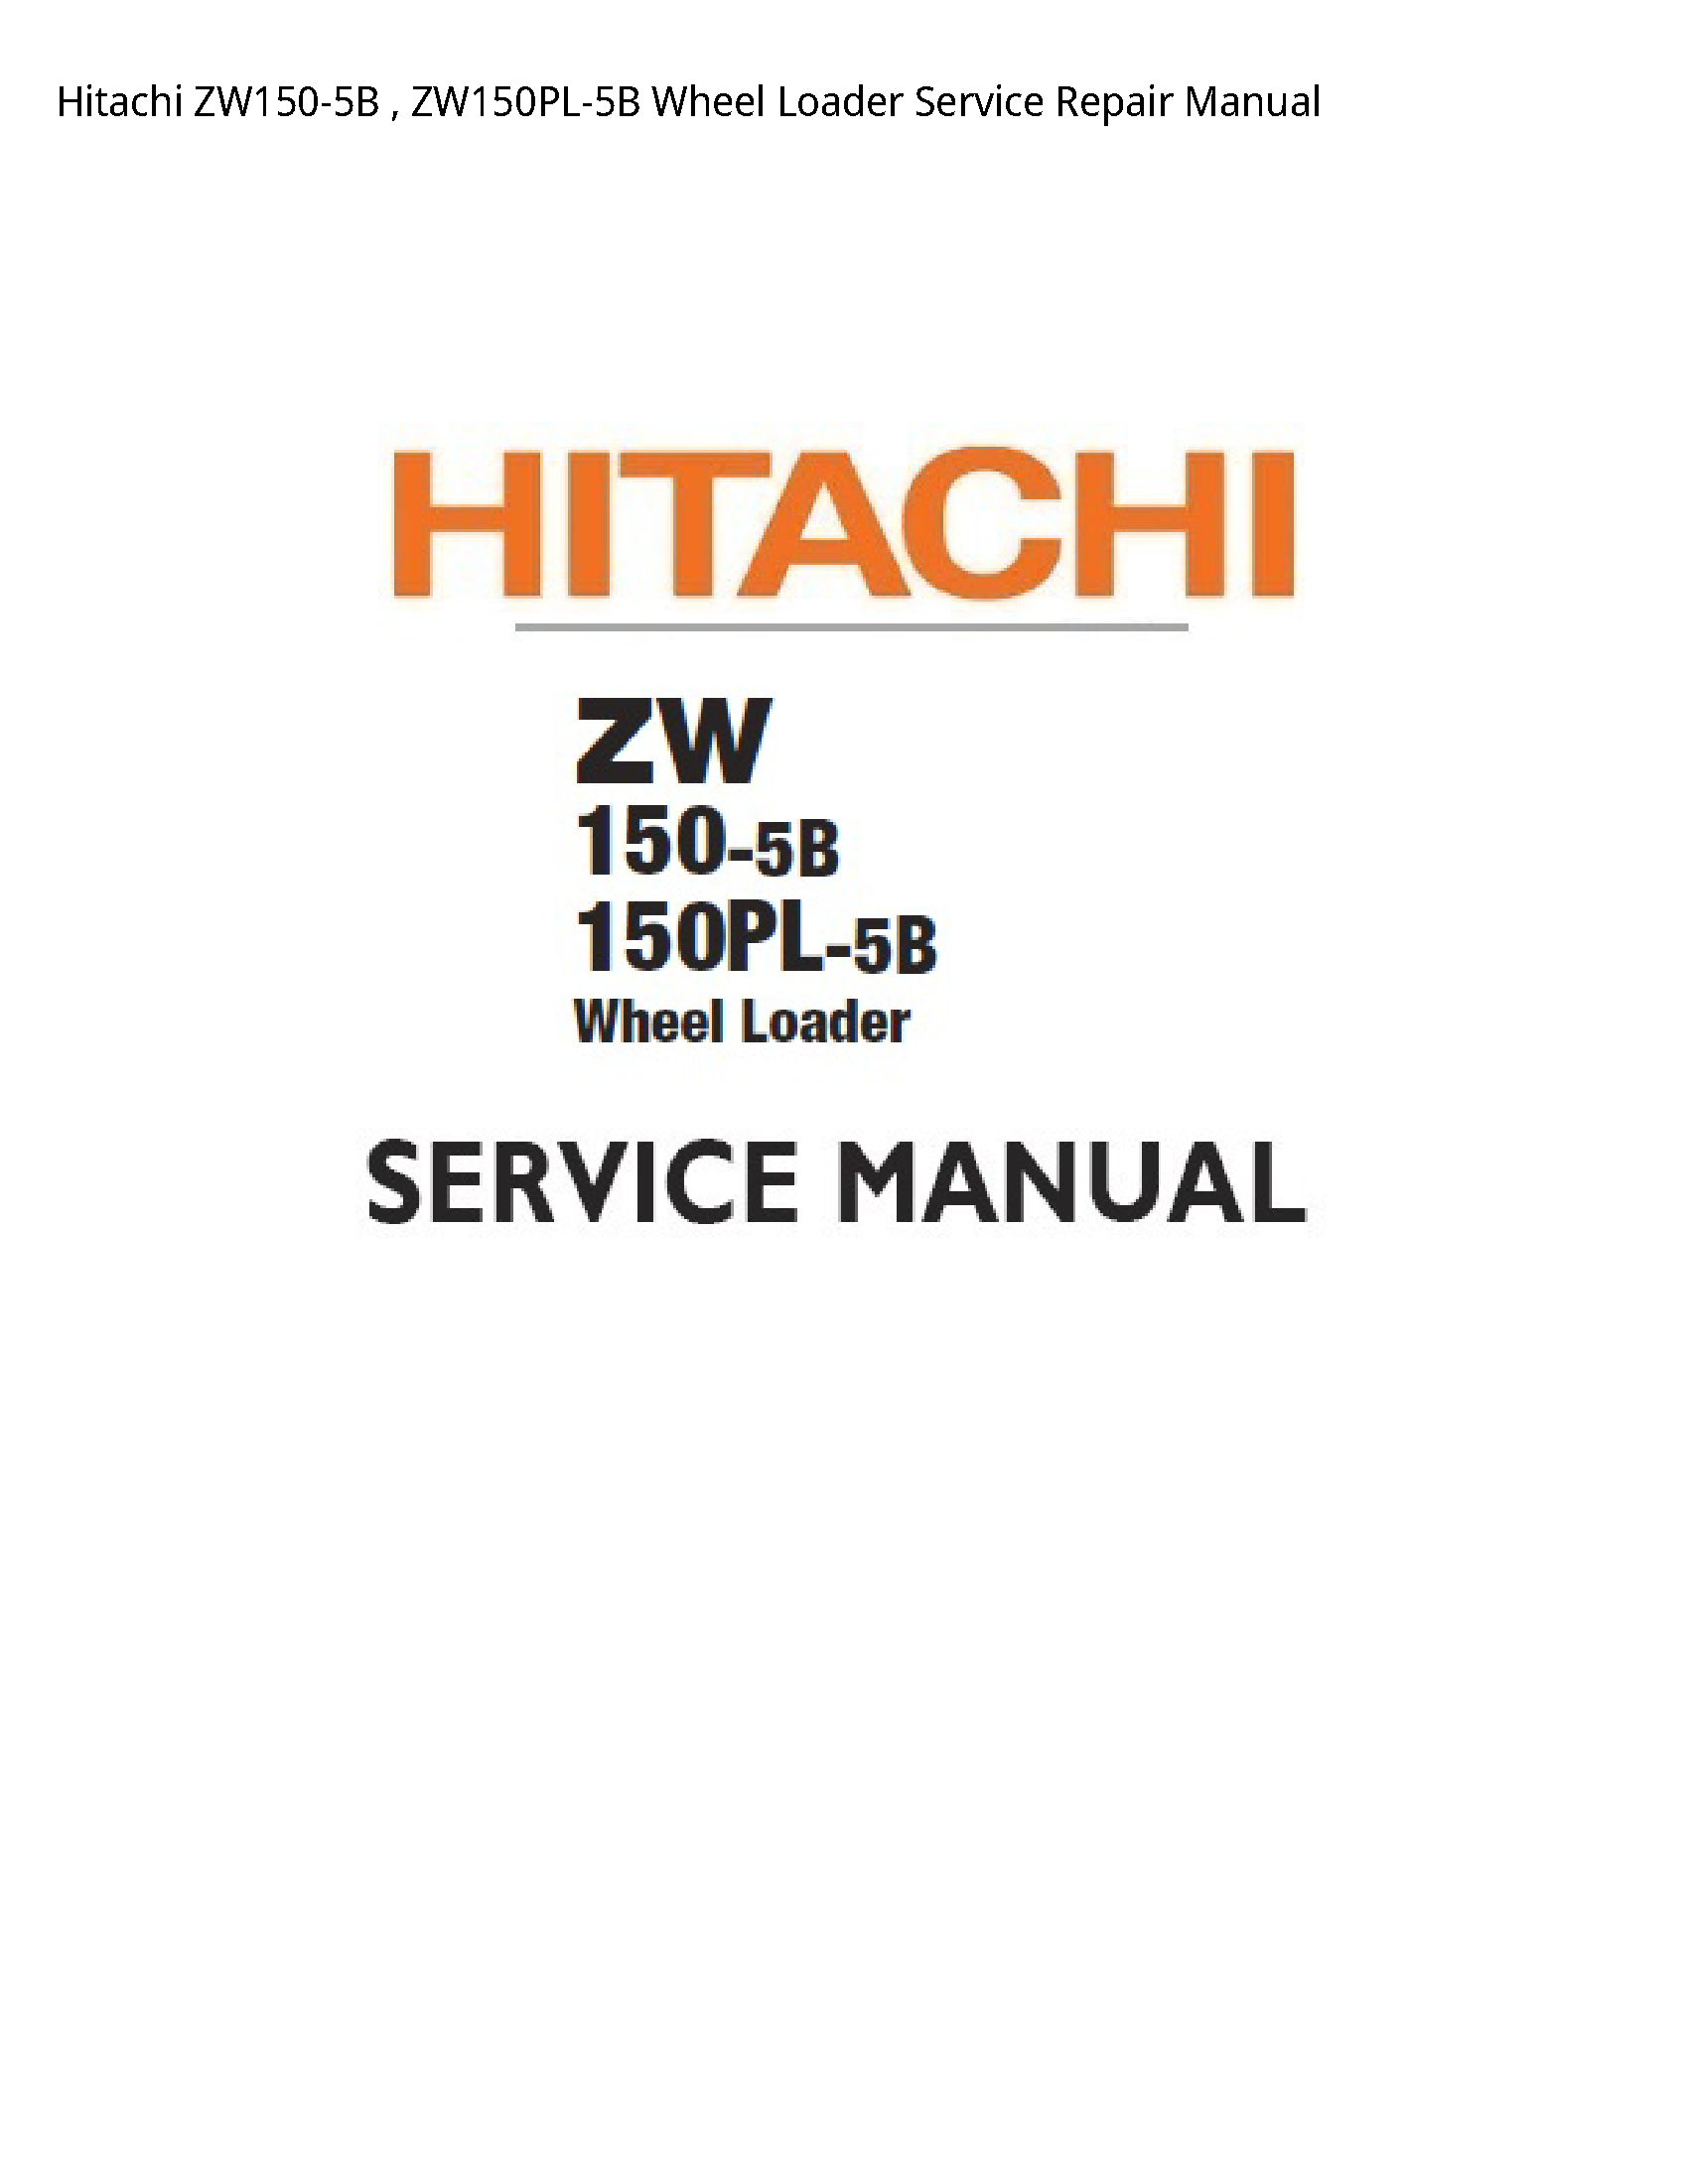 Hitachi ZW150-5B Wheel Loader manual